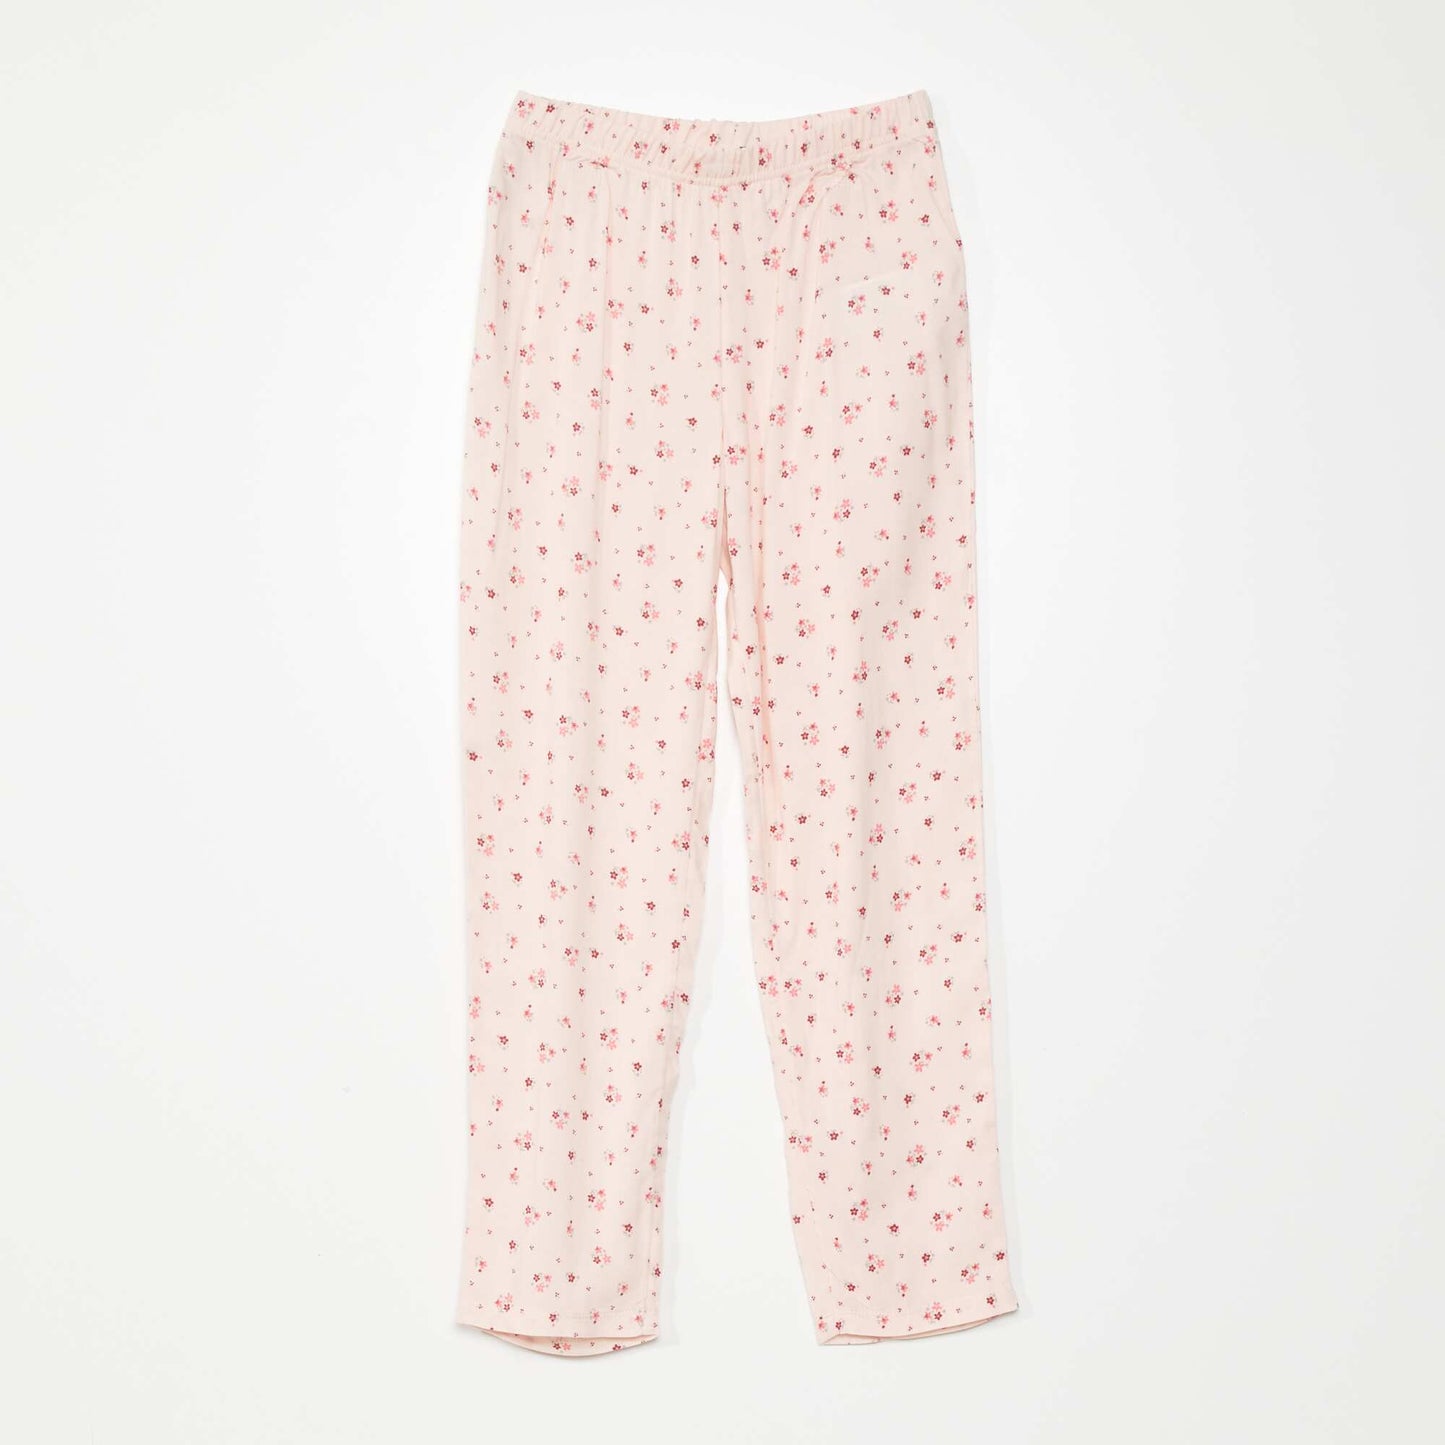 Pyjama long en jersey - 2 pièces Blanc/rose